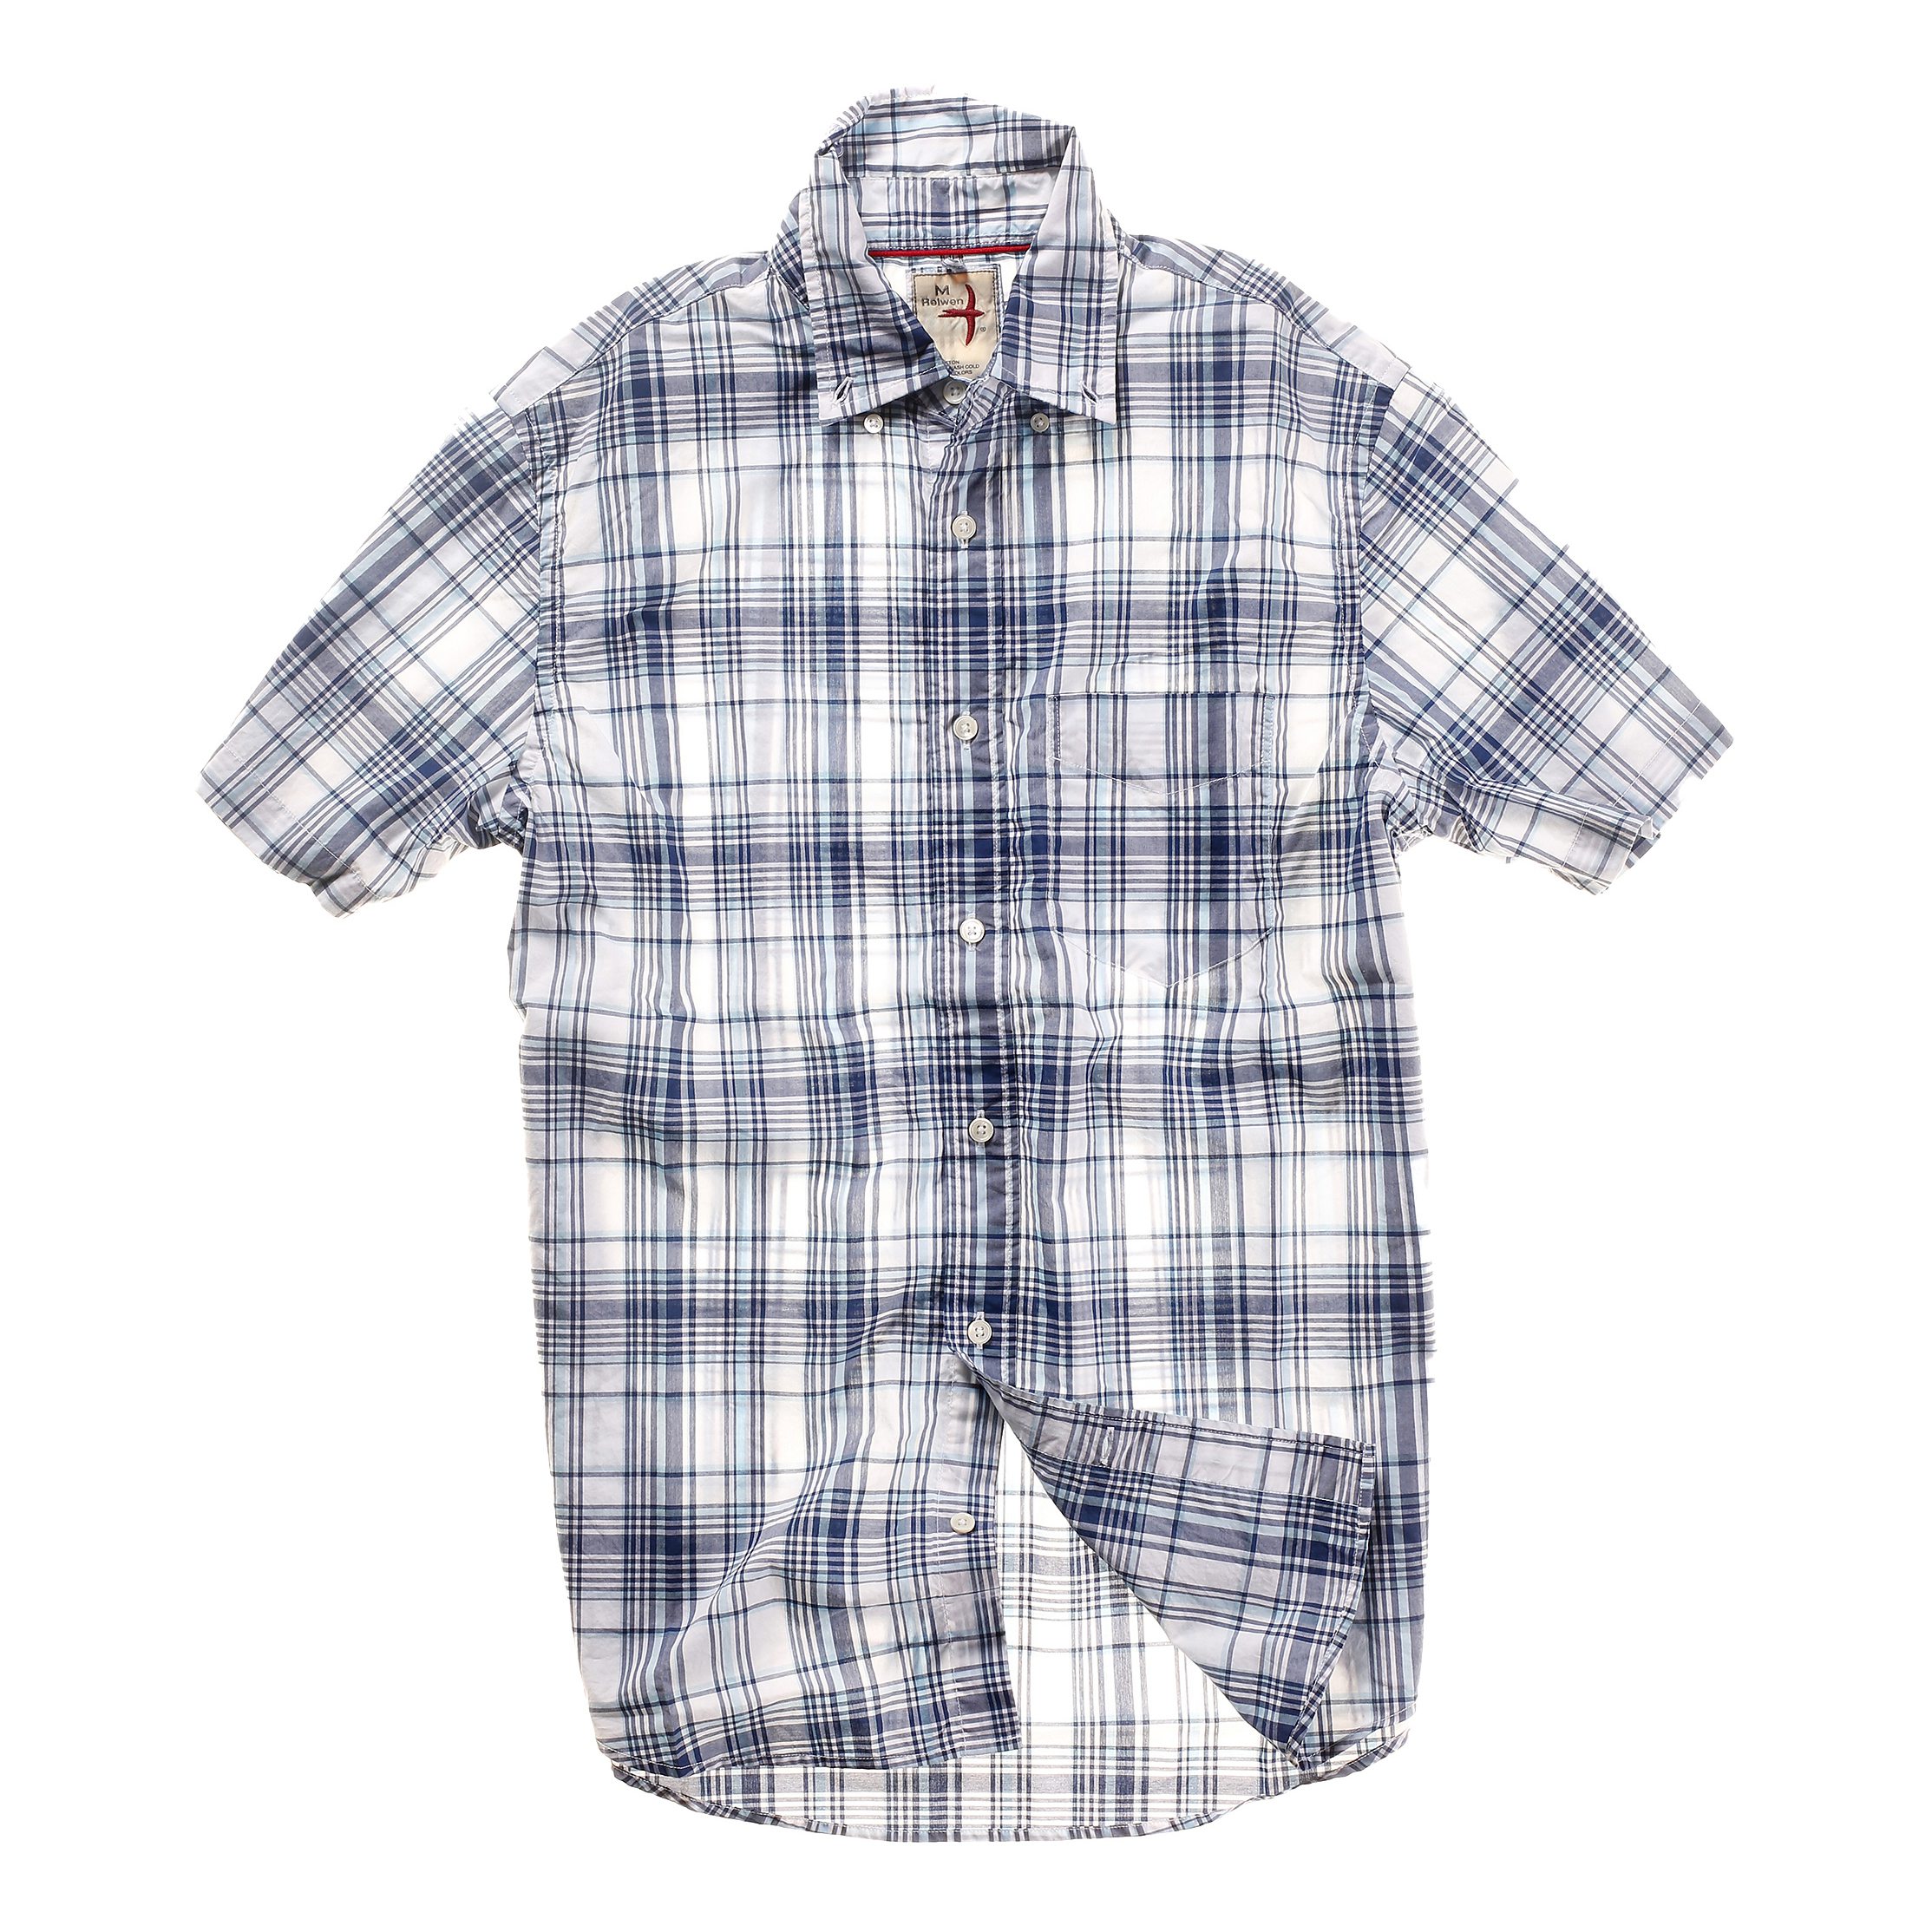 Relwen Broadcloth Short Sleeve Shirt - White/blue Madras | Short